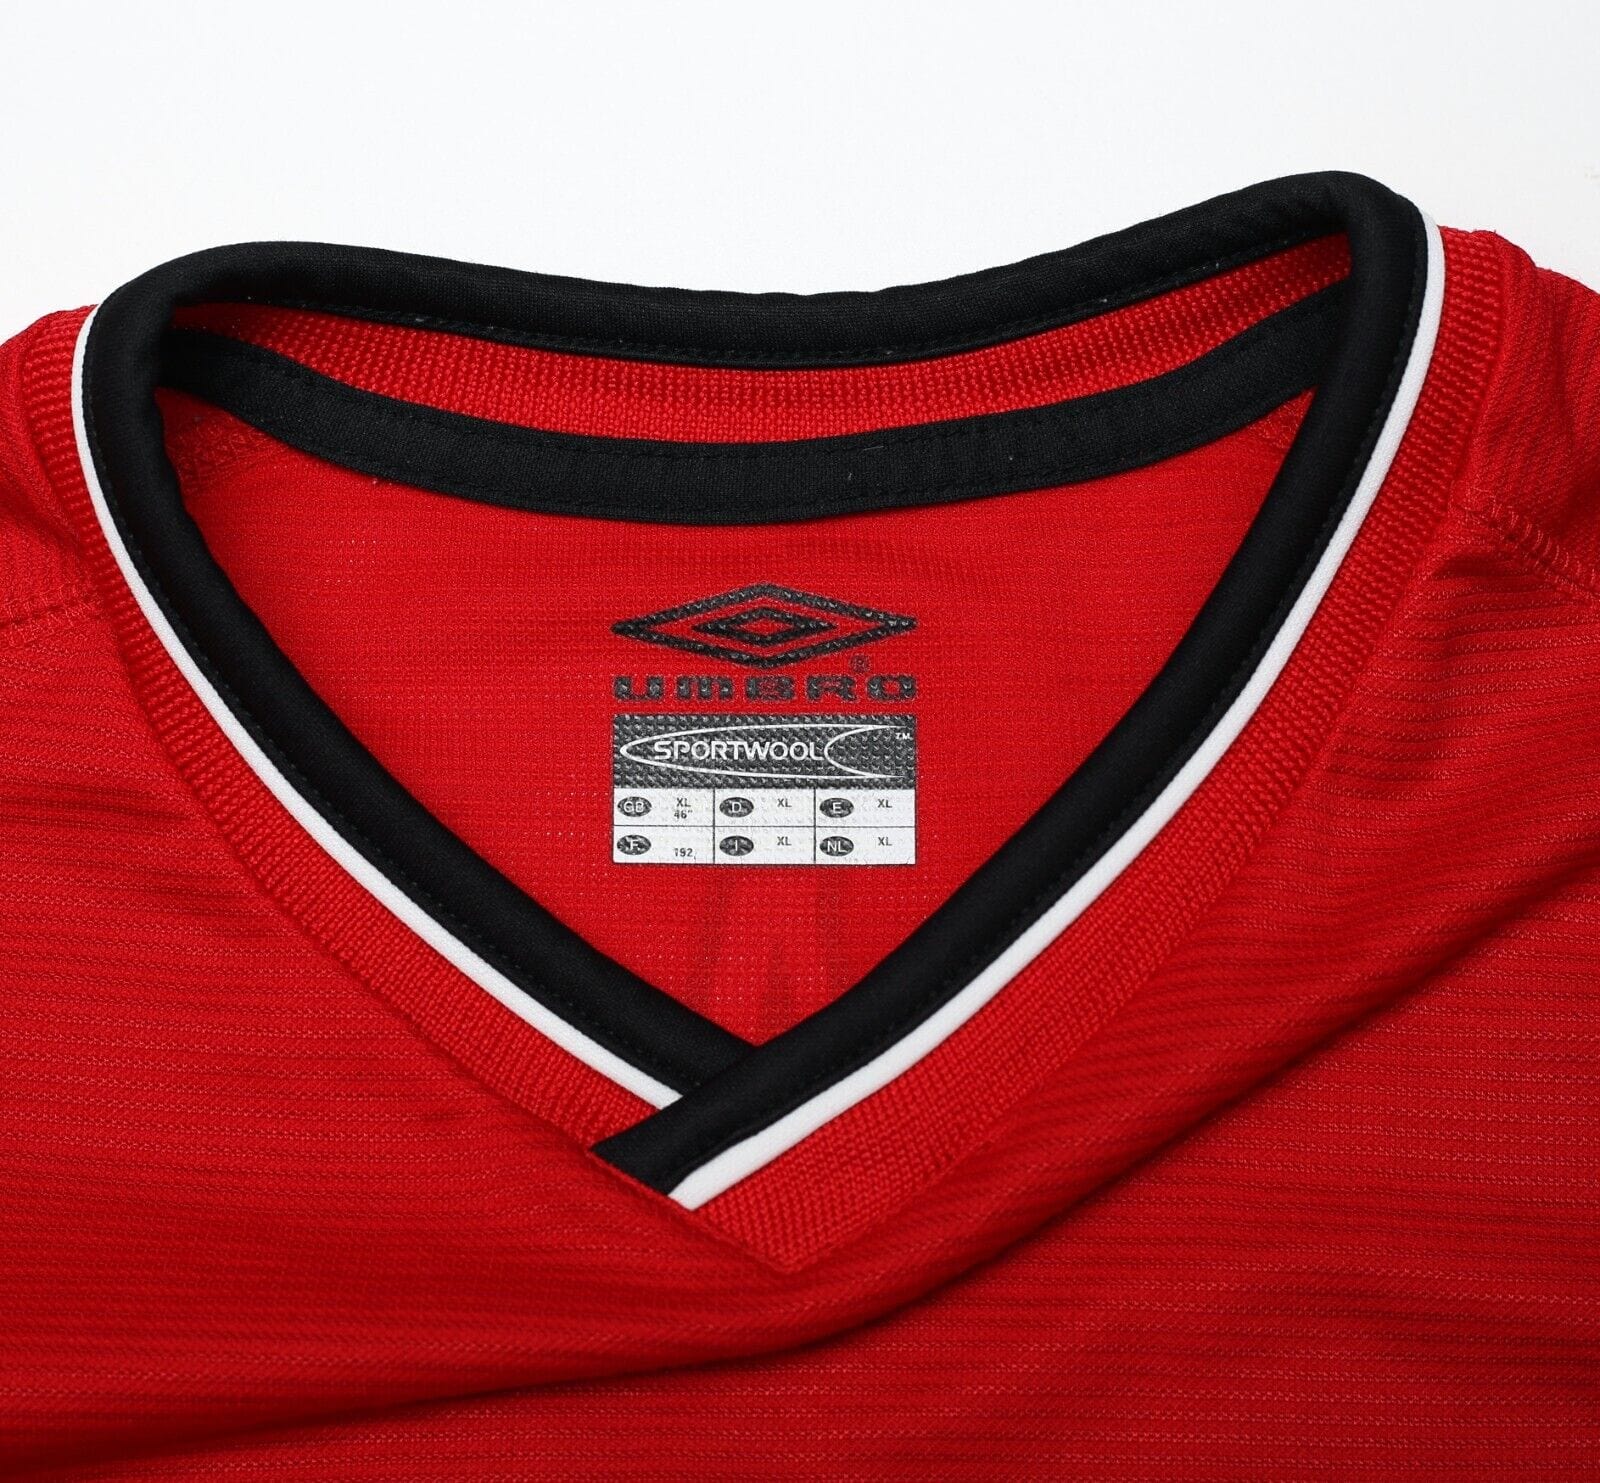 2000/02 BLANC #6 Manchester United Vintage Umbro UCL Home Football Shirt (XL)